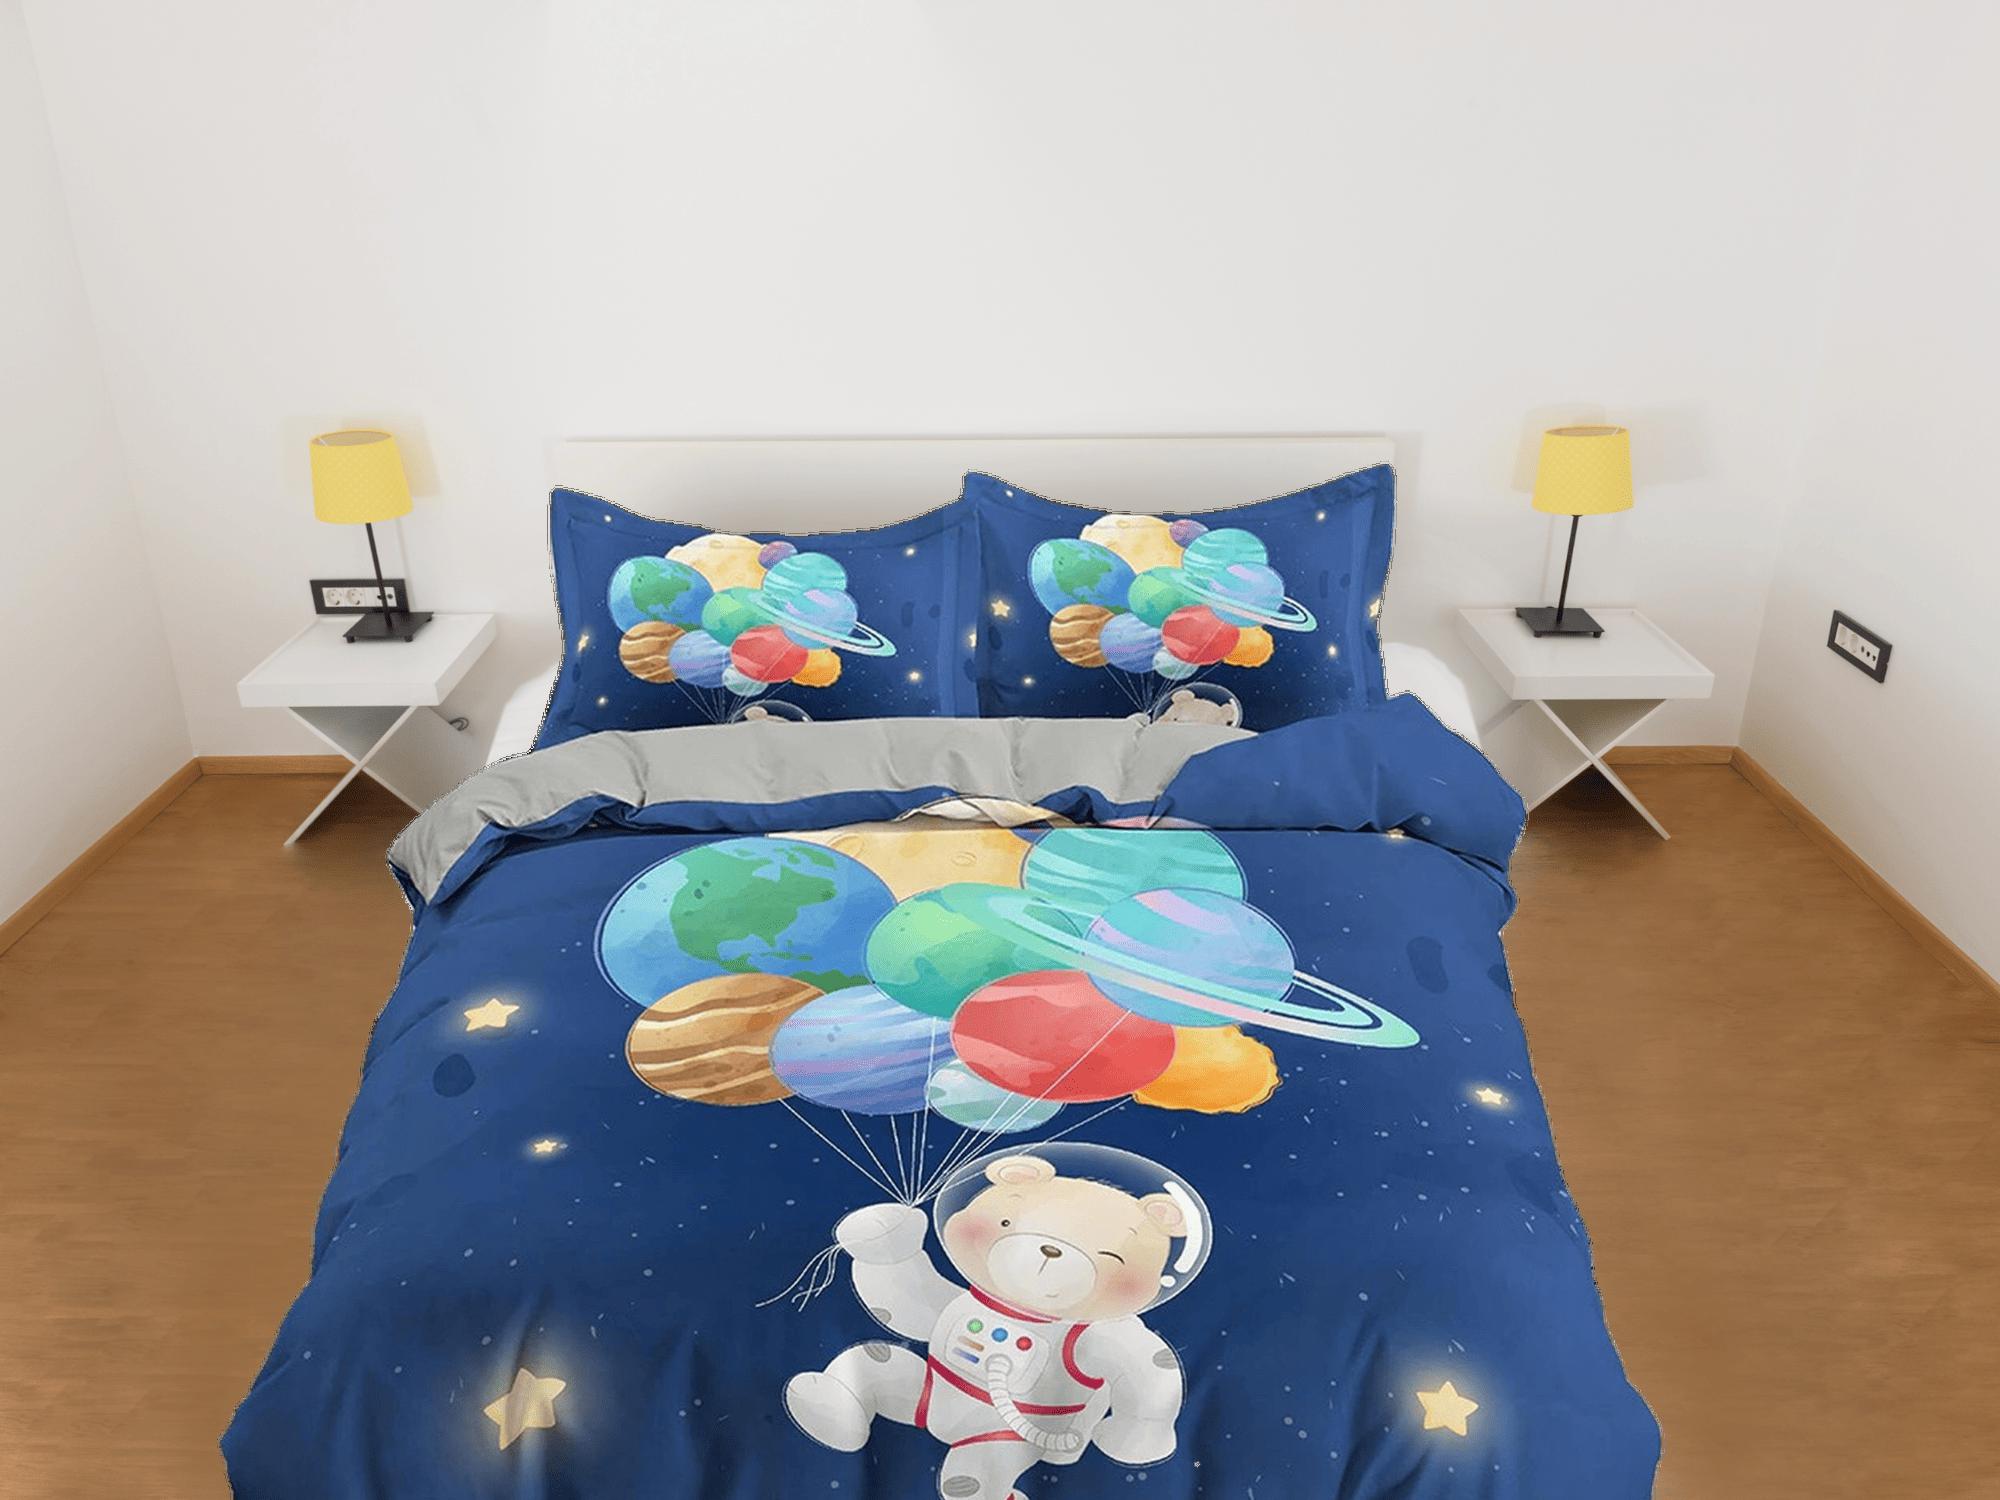 daintyduvet Cute bear astronaut with planets balloon, blue toddler bedding, duvet cover kids, crib bedding, baby zipper bedding, king queen full twin